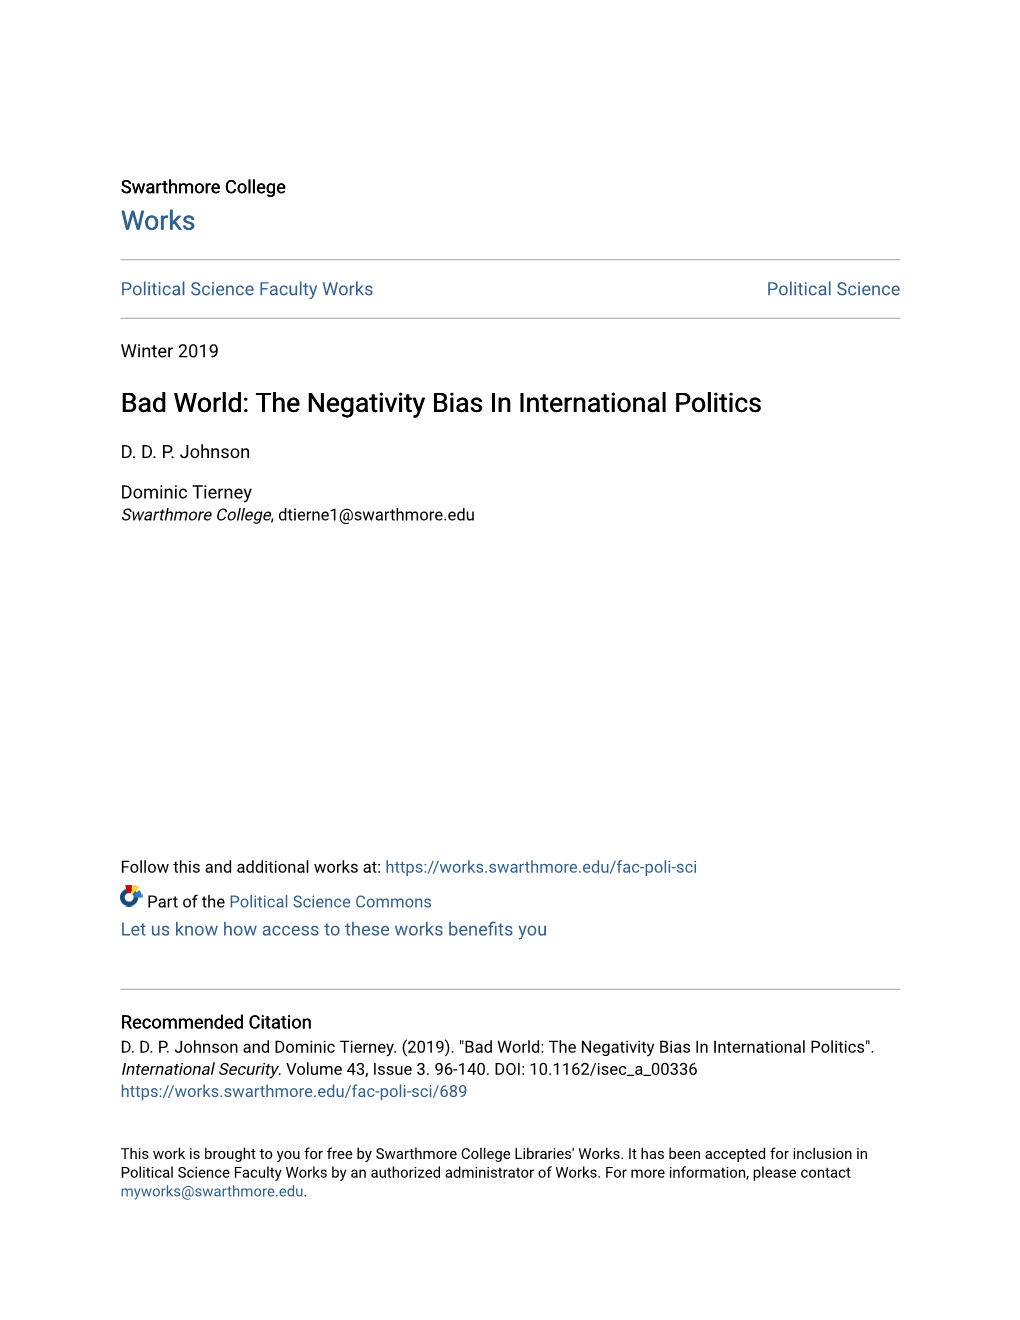 The Negativity Bias in International Politics